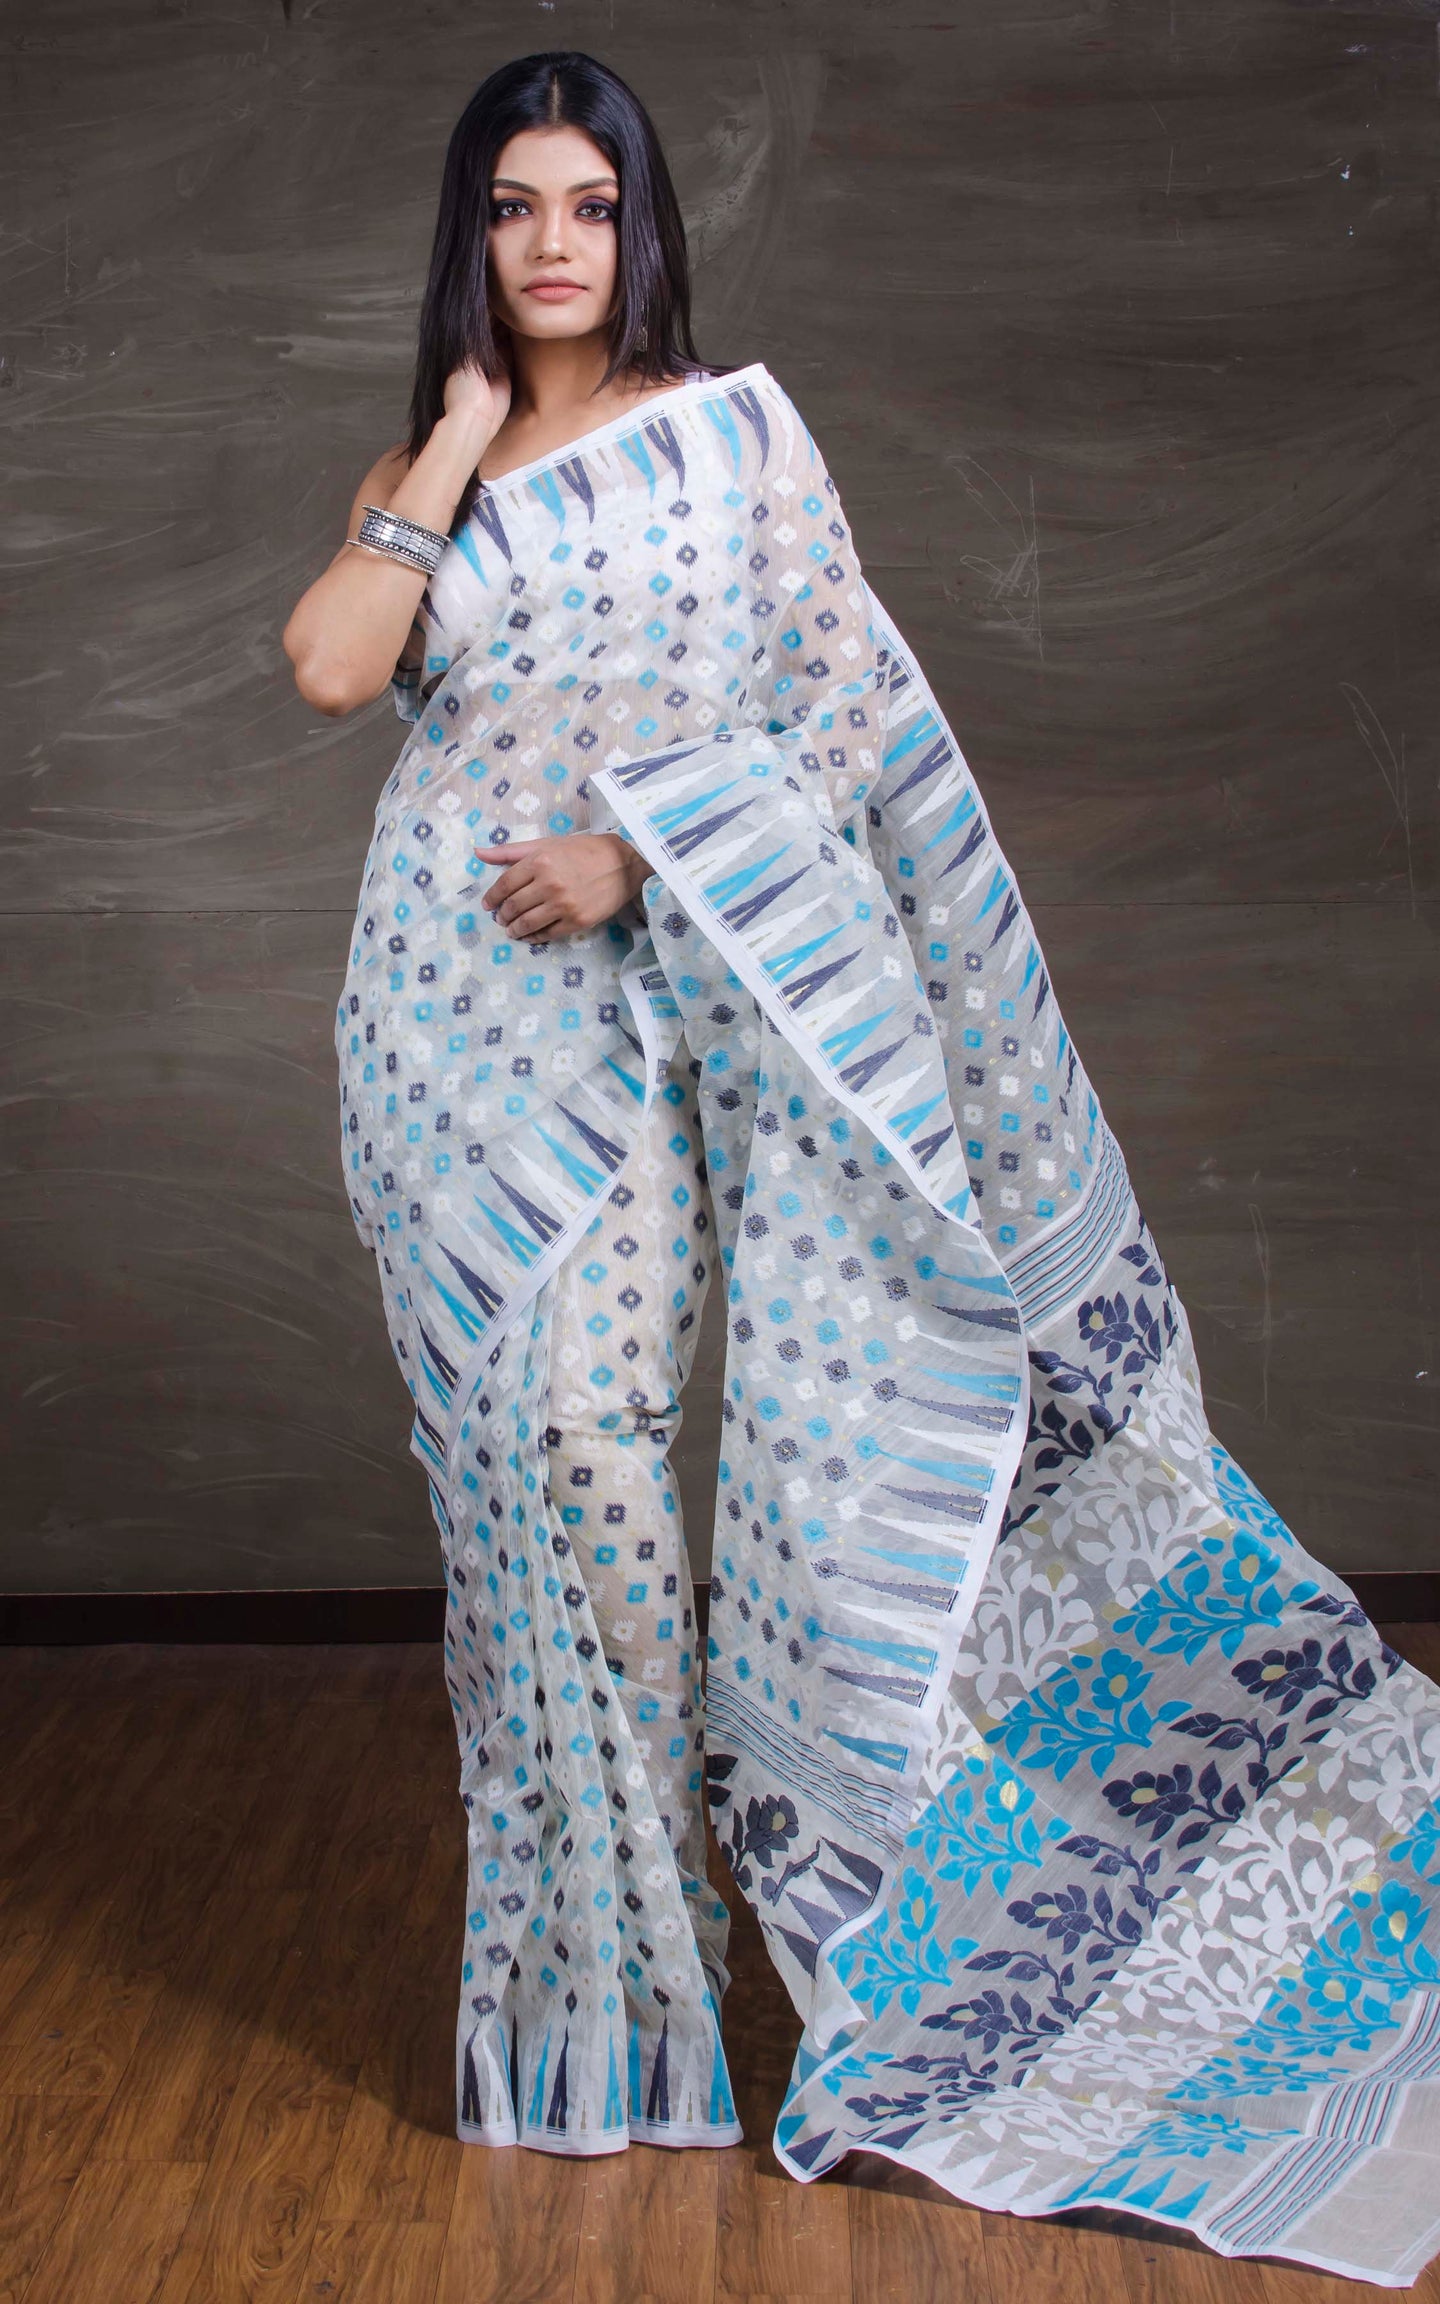 Traditional Soft Jamdani Saree in White and Multicolored Thread Work